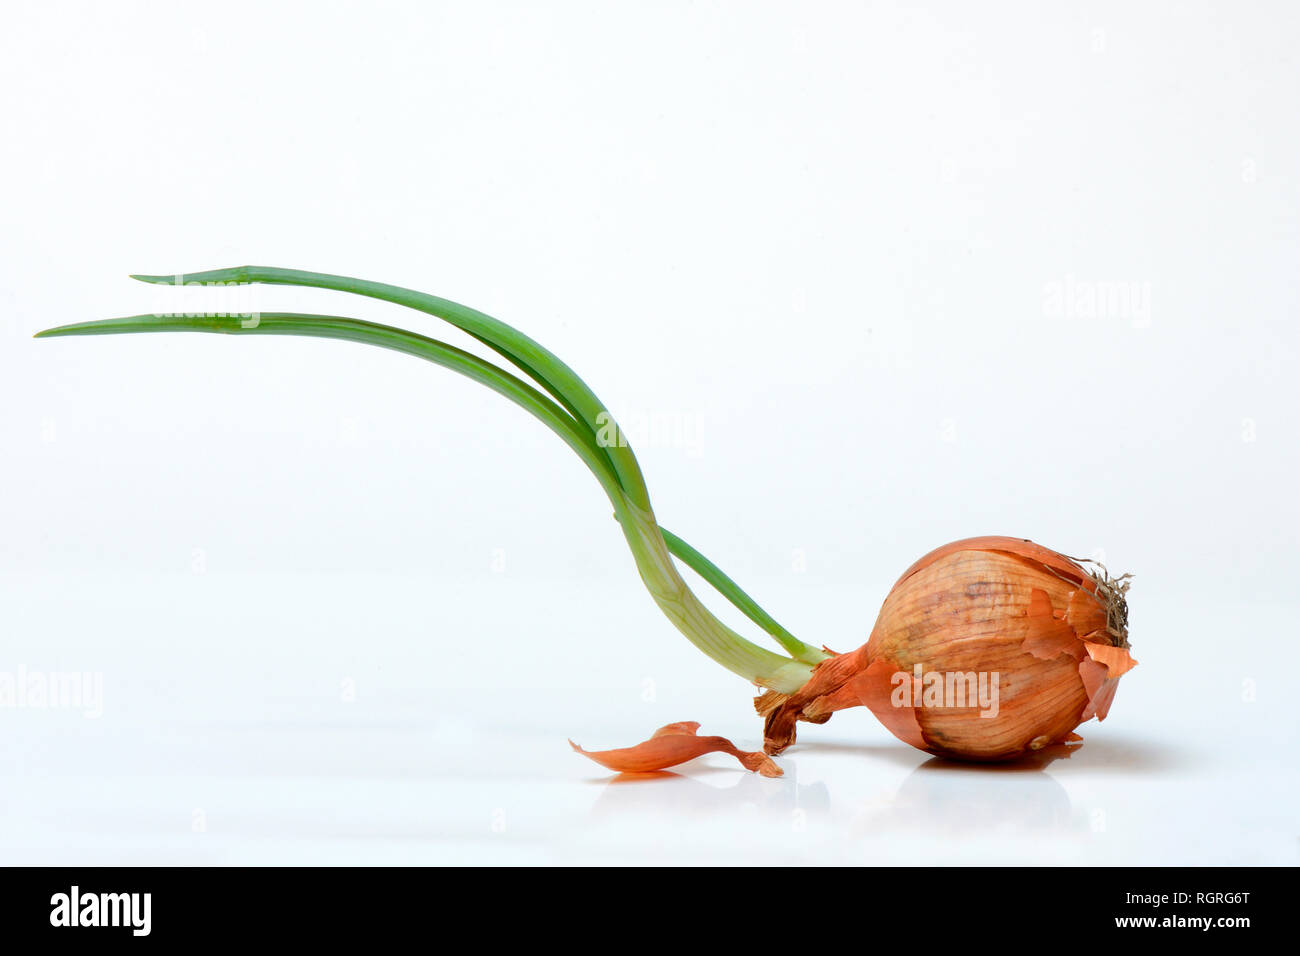 Onion with budding, Allium cepa Stock Photo